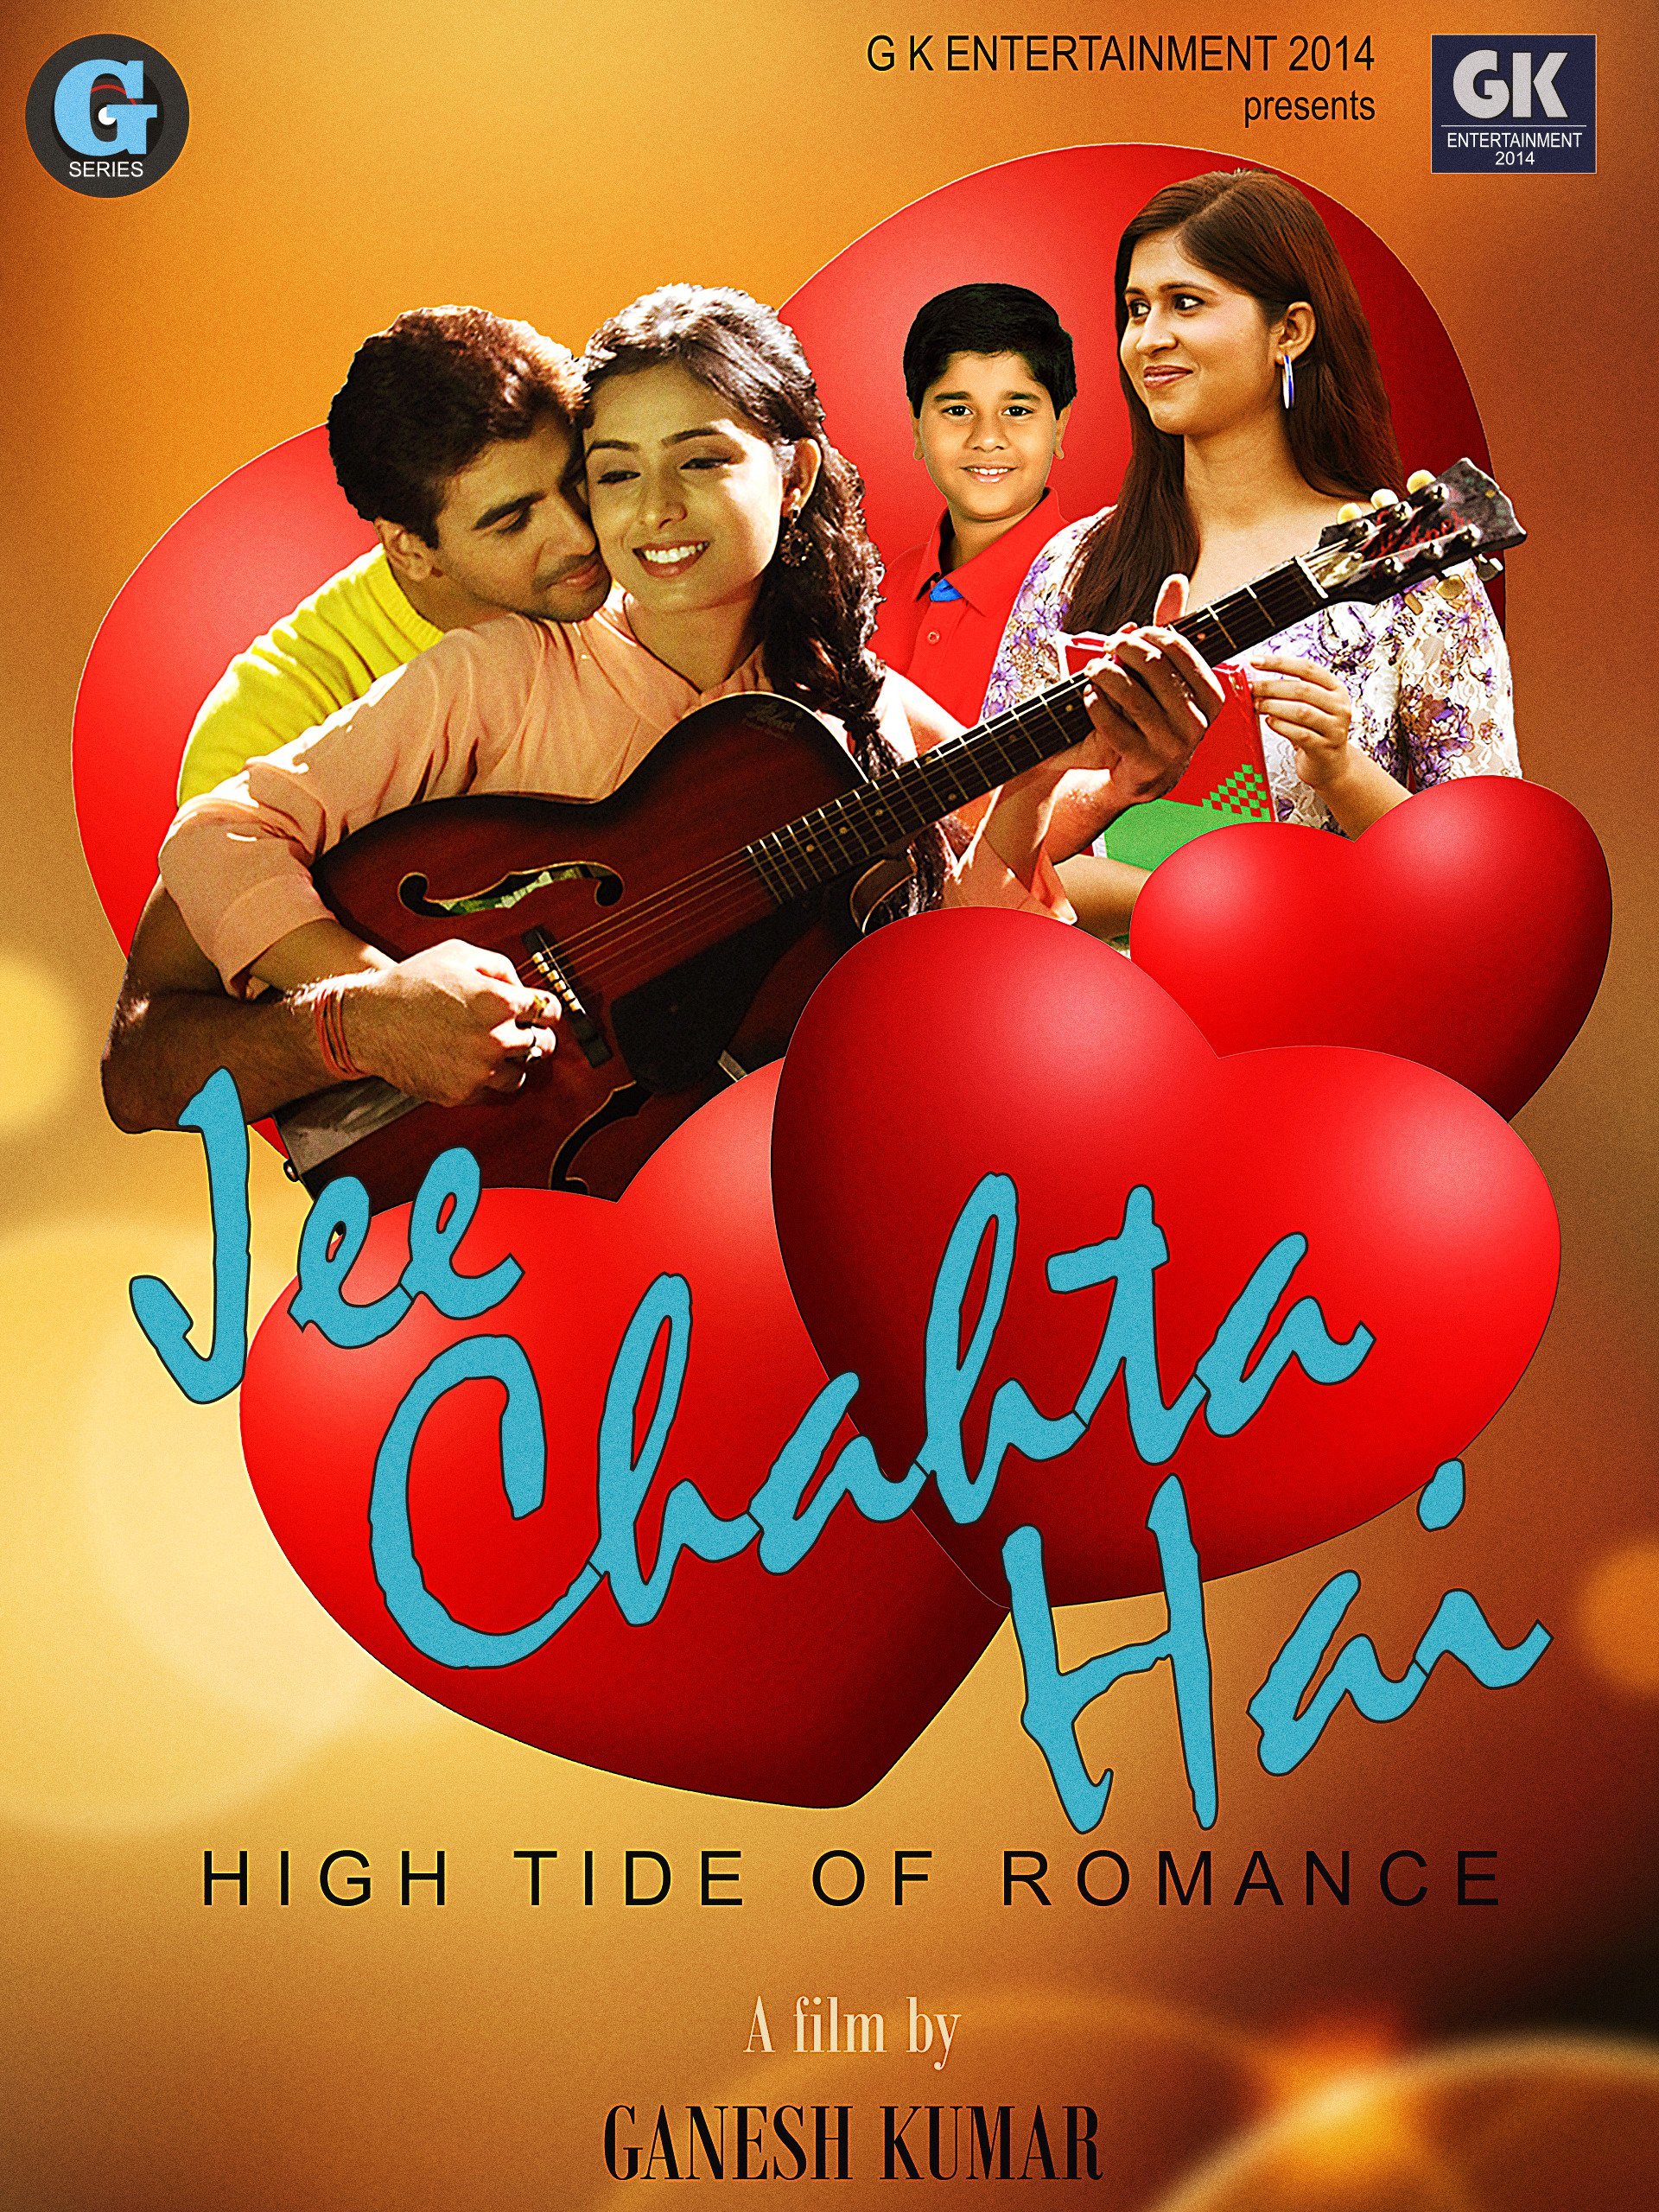 Download Jee Chahta Hai High Tide Of Romance 2015 Hindi Full Movie 480p HDRip [900MB]